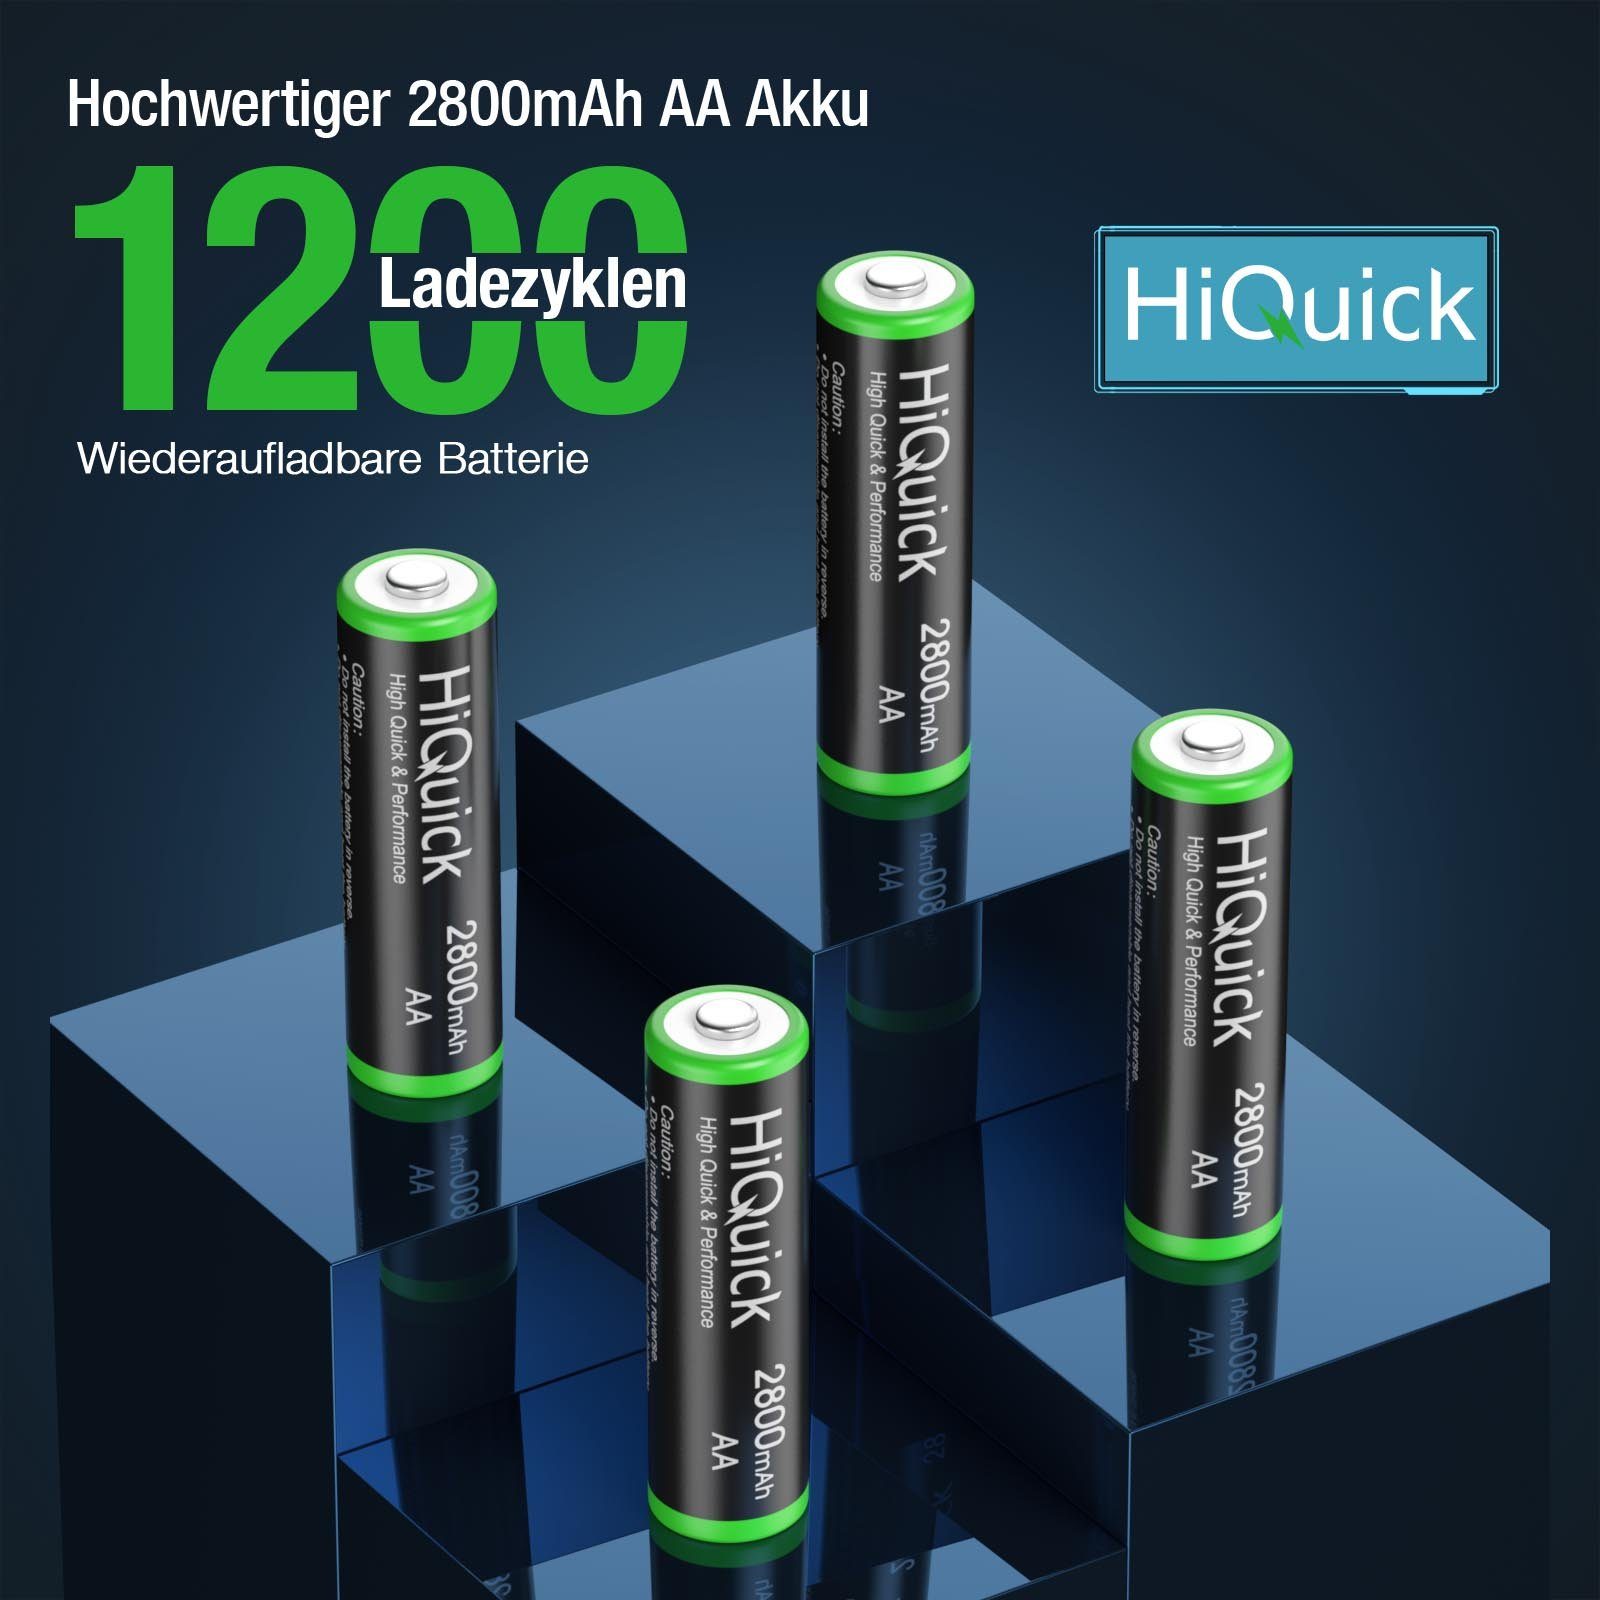 HiQuick 1,2V Mignon V) Akku,NI-MH Wiederaufladbare Batterie, 1100mAh 2800mAh AAA (1.2v AA